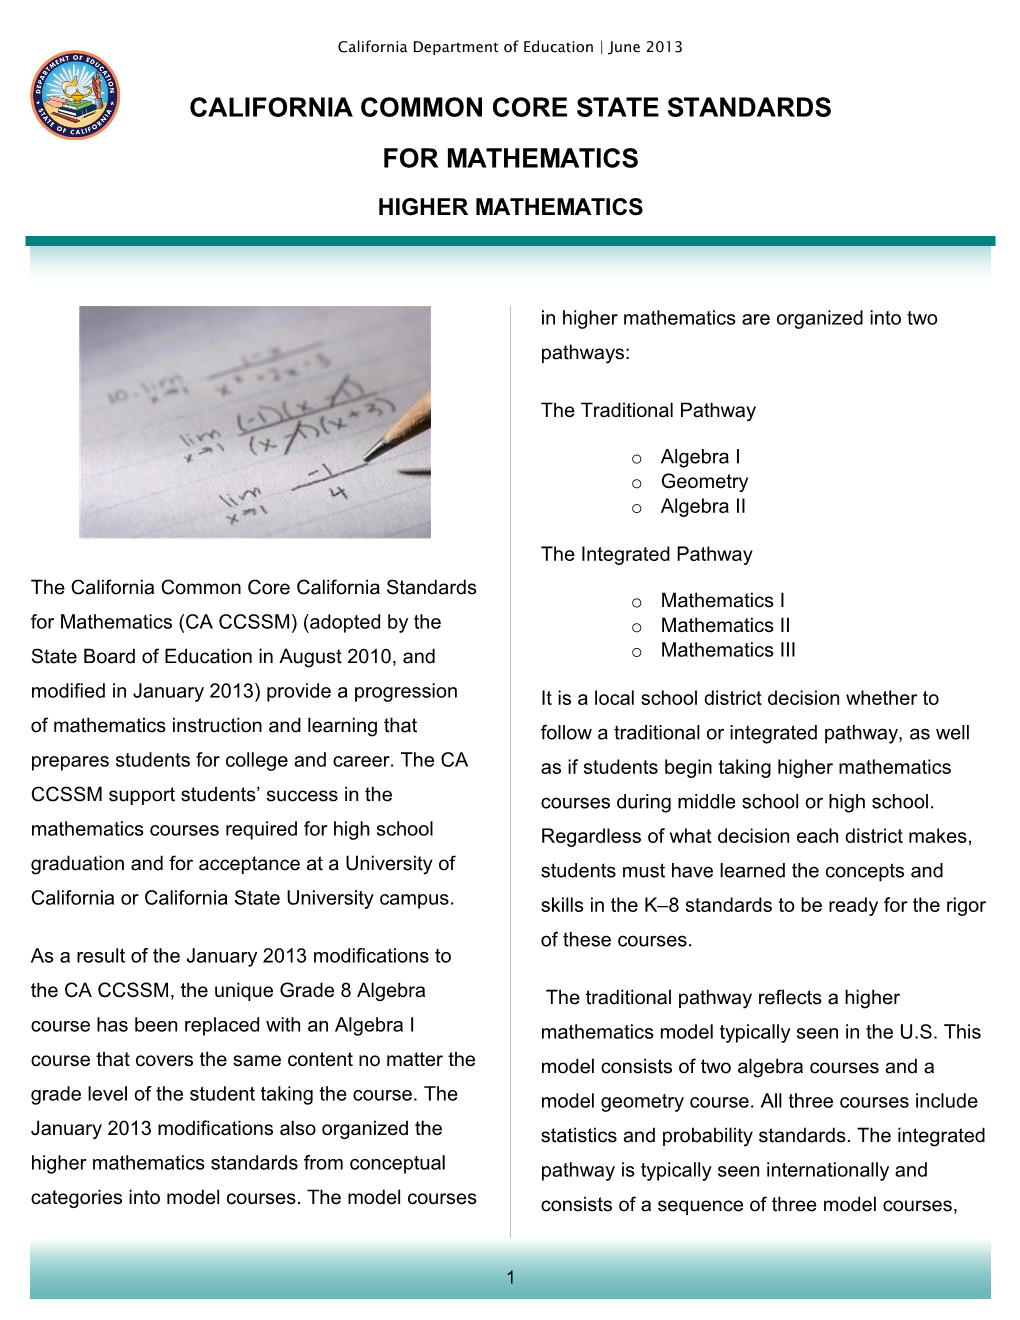 Higher Mathematics Flyer - Common Core Standards (CA Dept of Education)